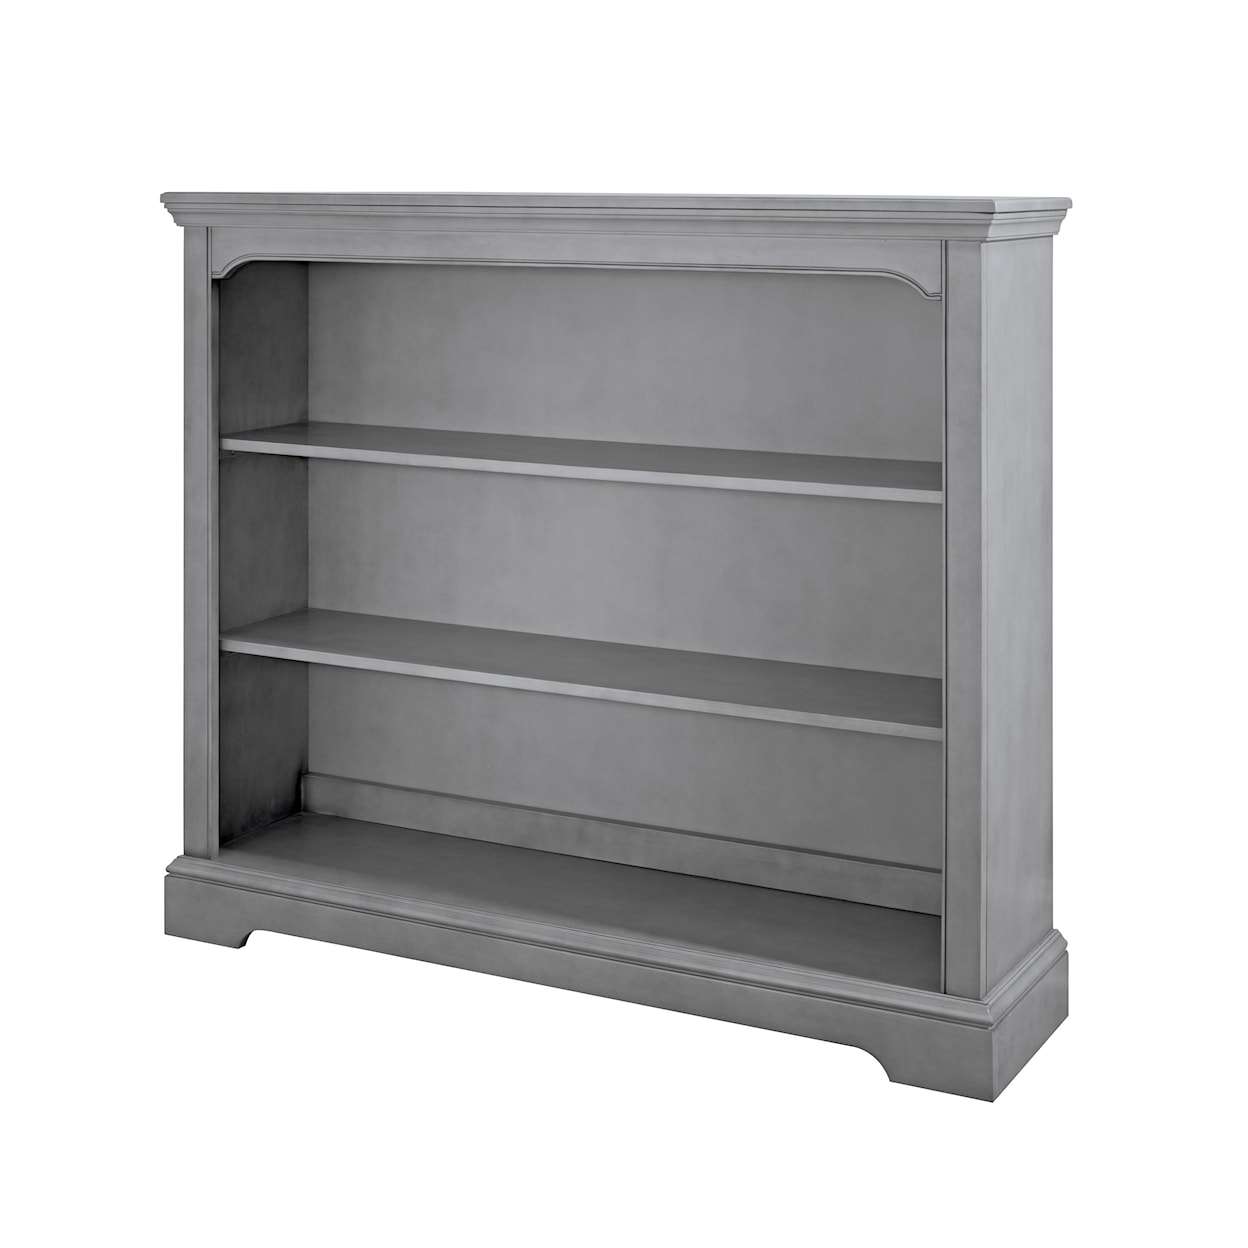 Westwood Design Hanley Hutch/Bookcase